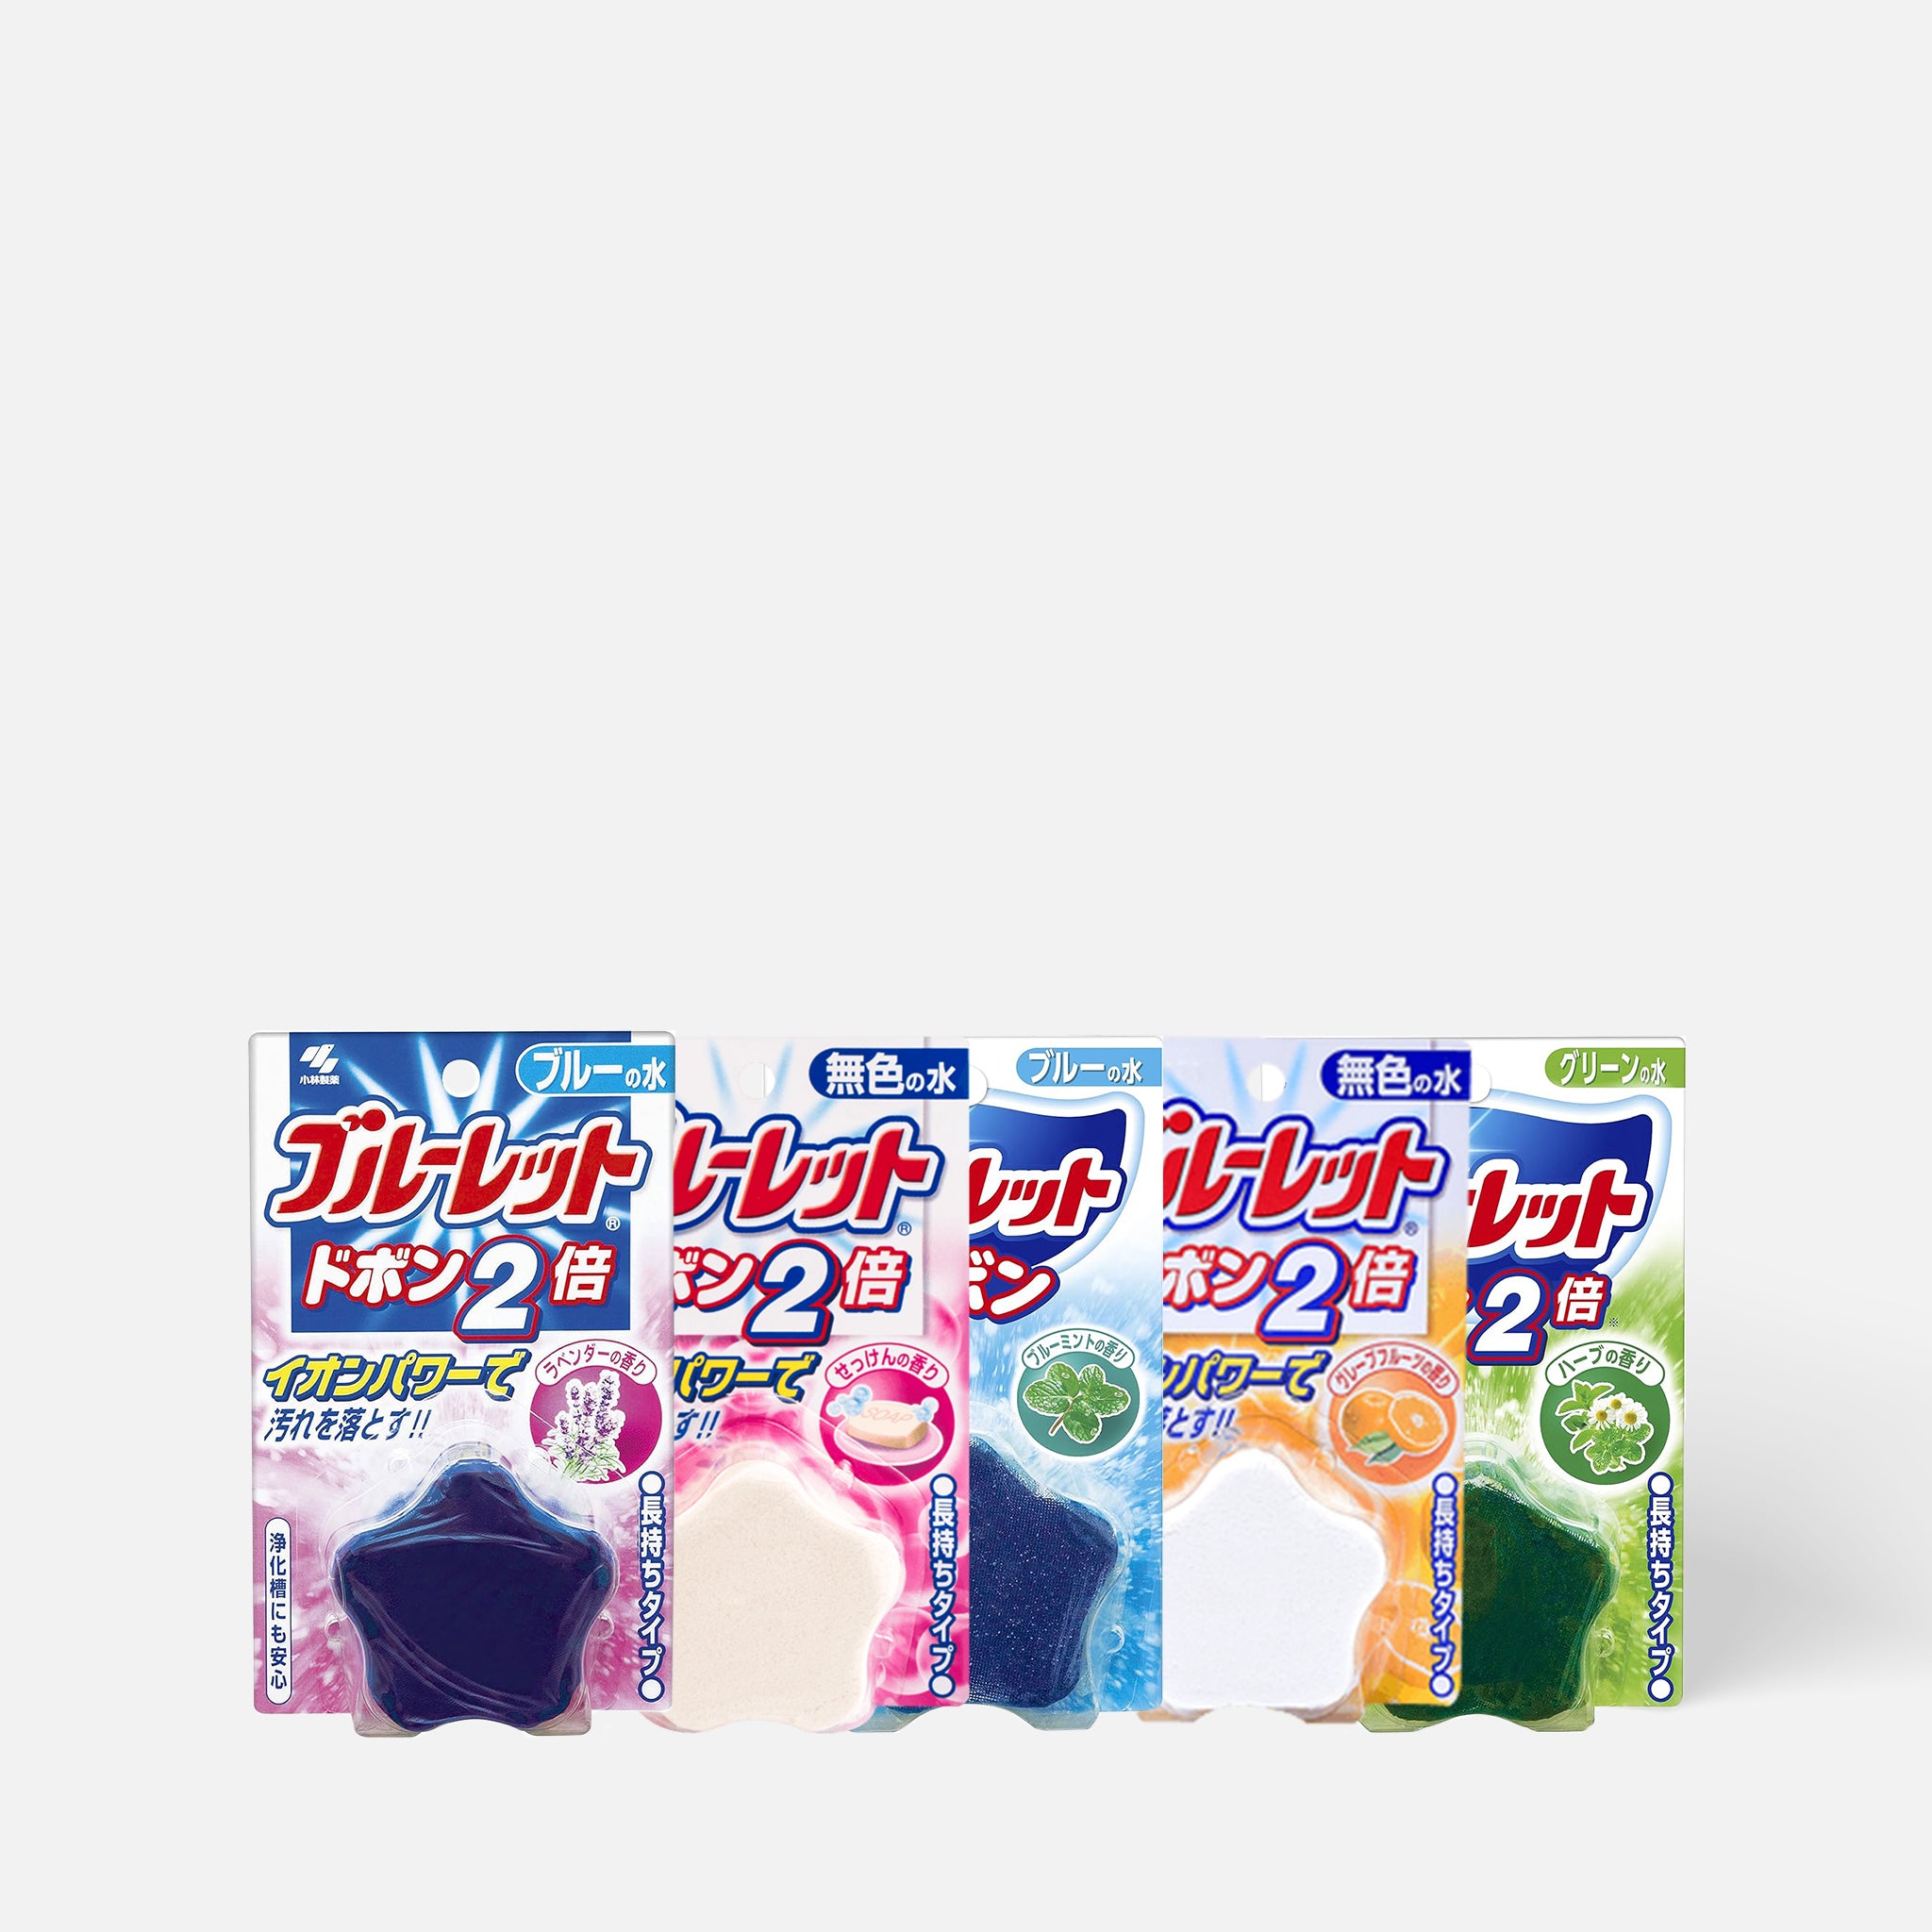 KOBAYASHI Bluelet Dobon 2x Herbal Scent 120g